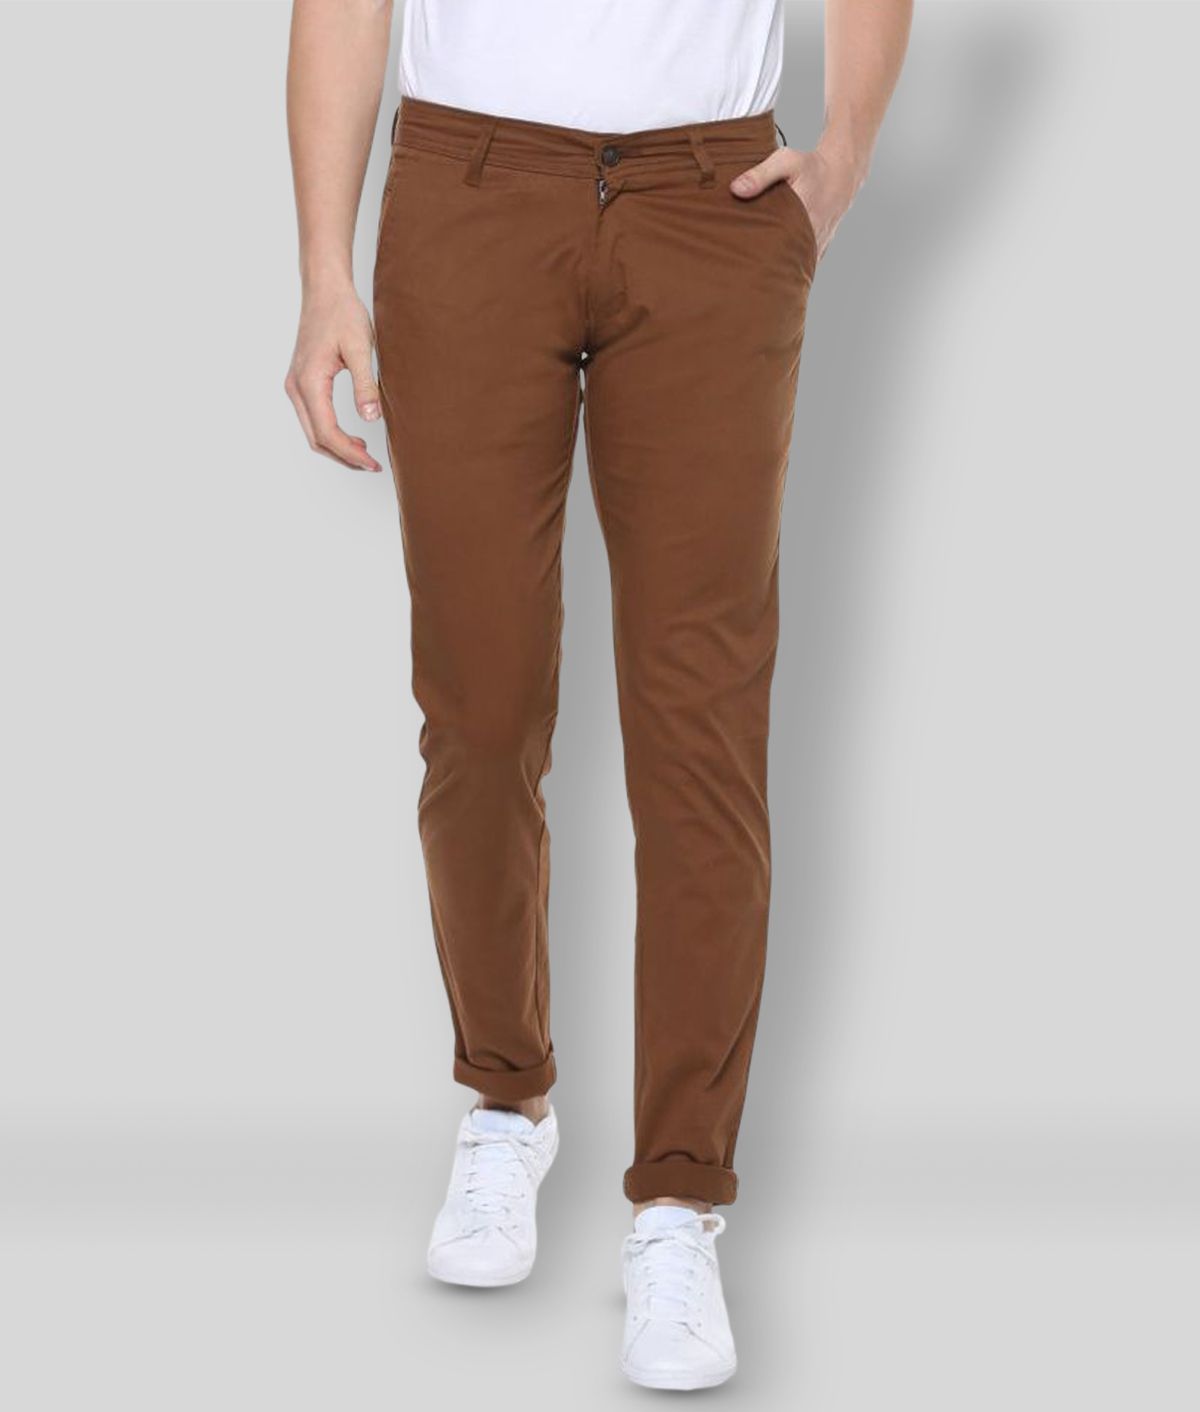     			Urbano Fashion - Brown Cotton Slim Fit Men's Chinos (Pack of 1)